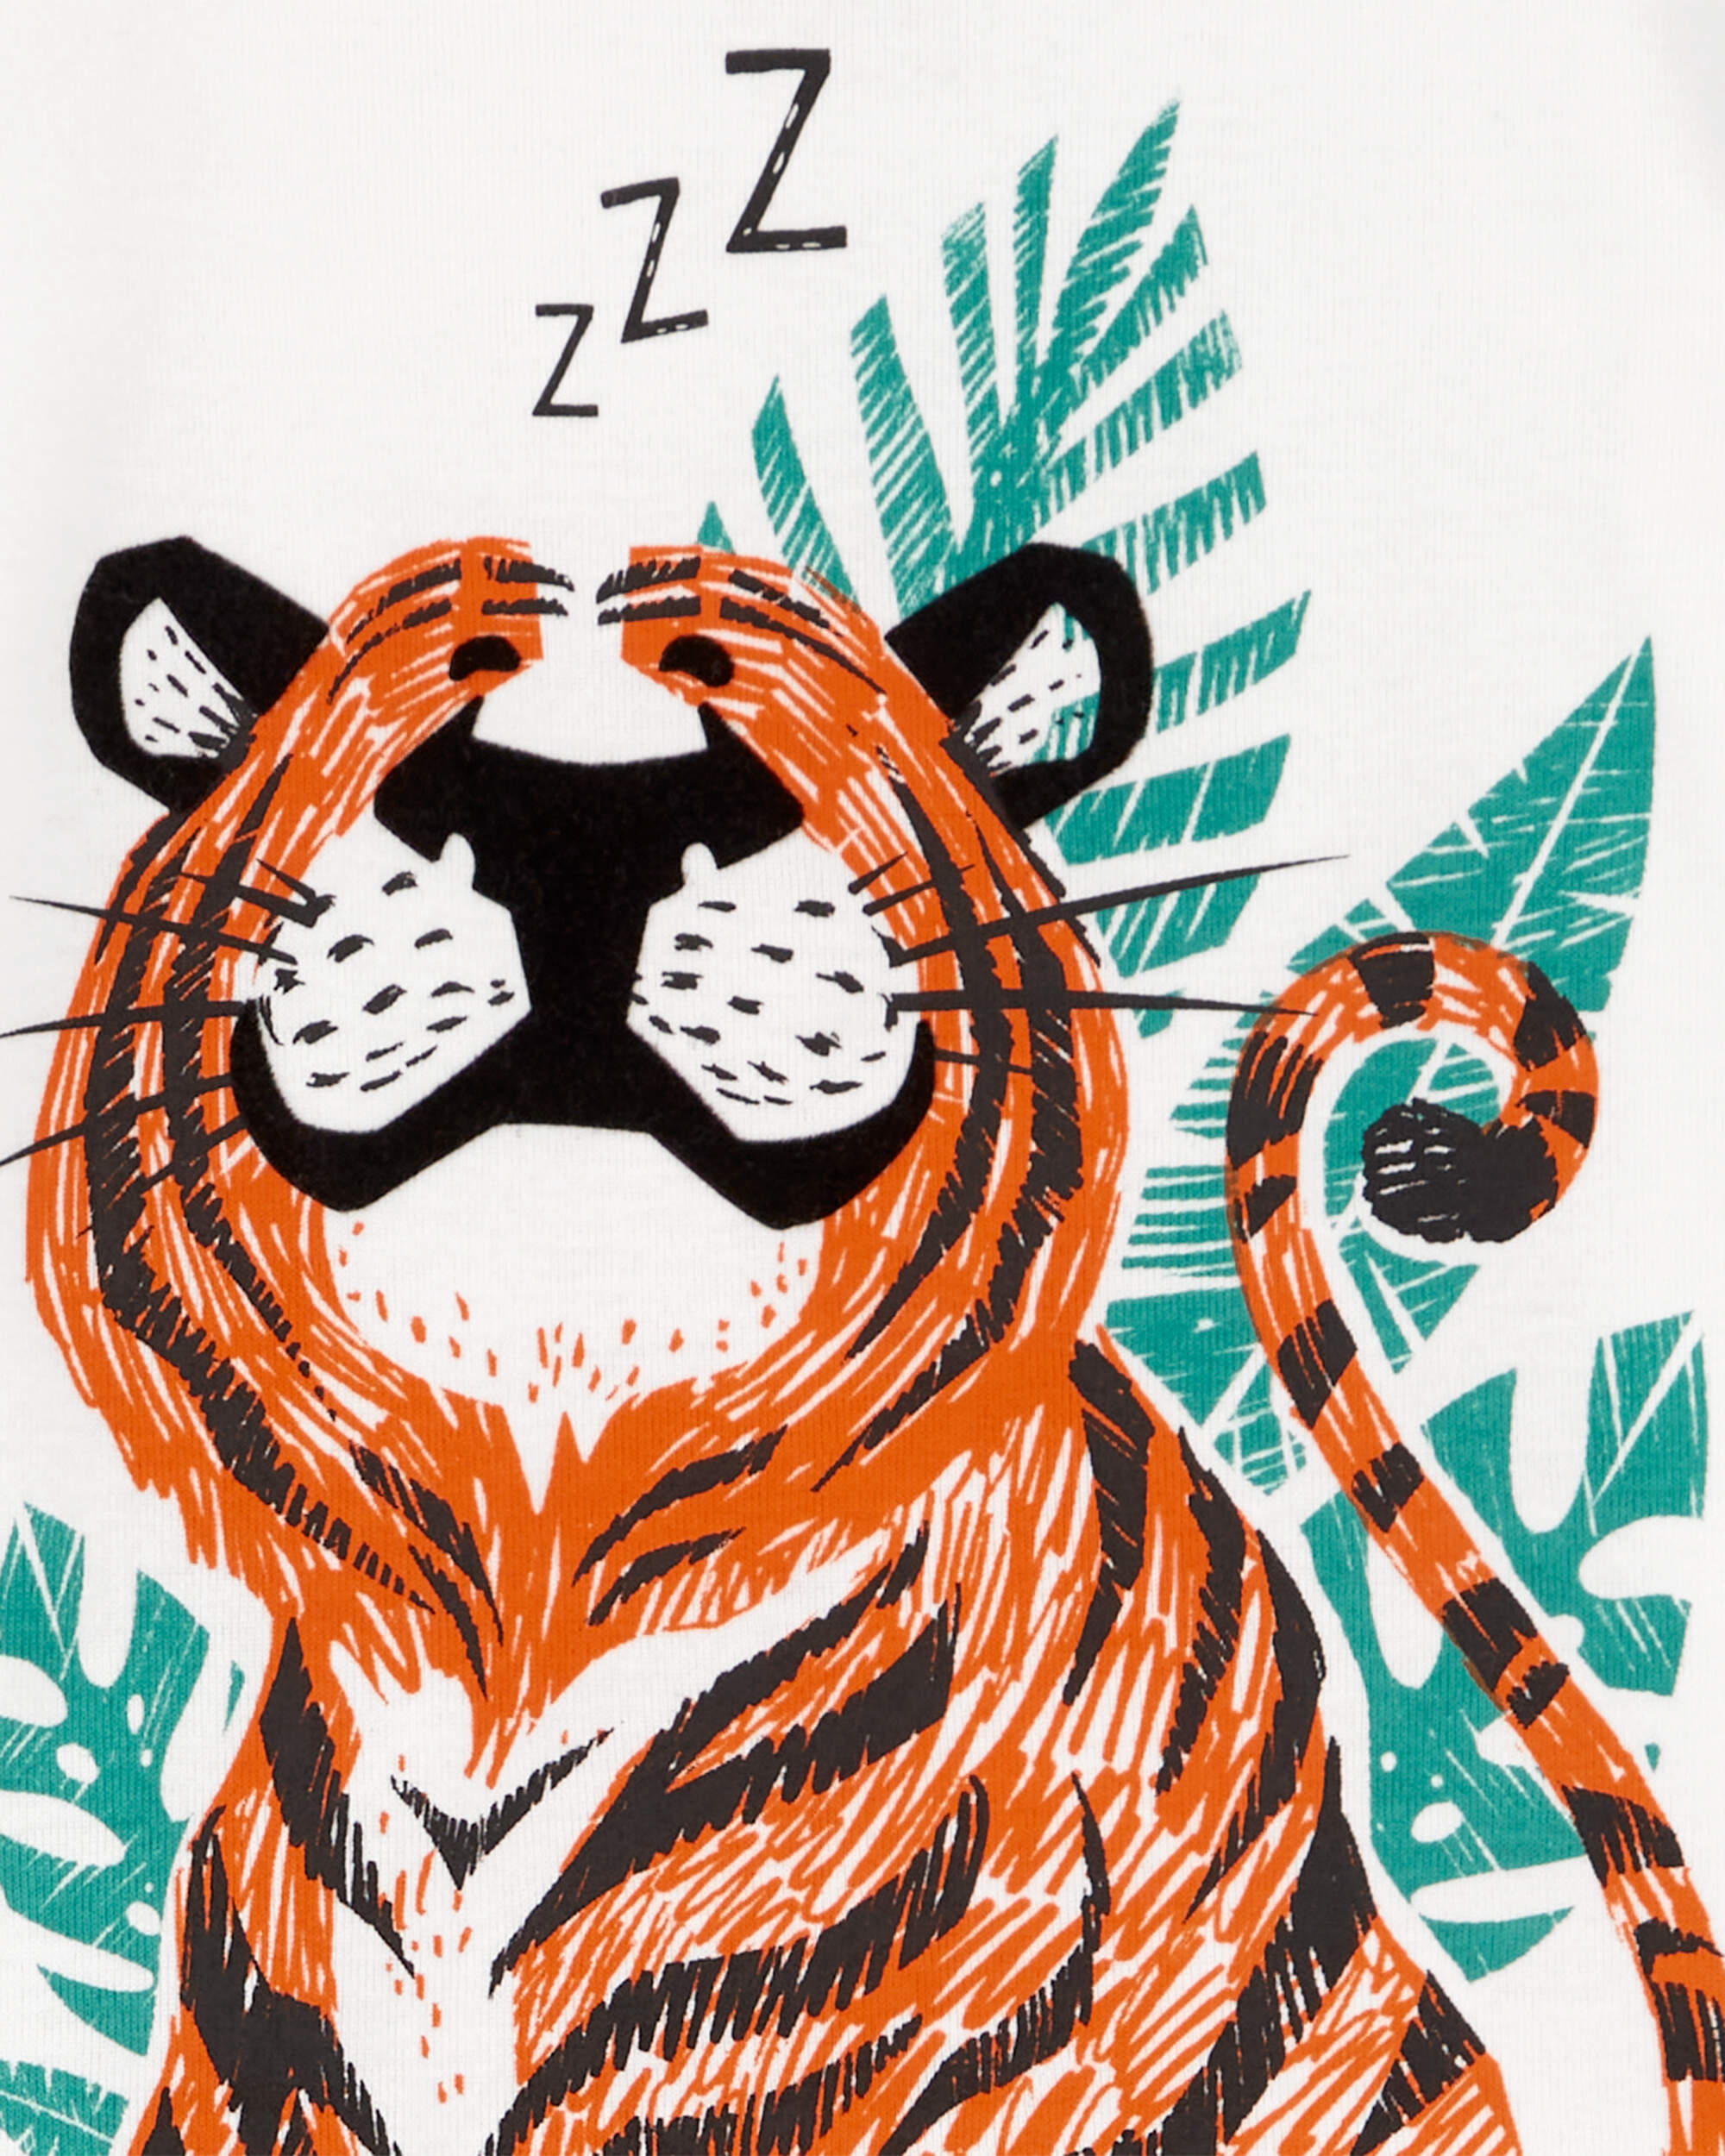 Baby 2-Piece Tiger 100% Snug Fit Cotton Pyjamas